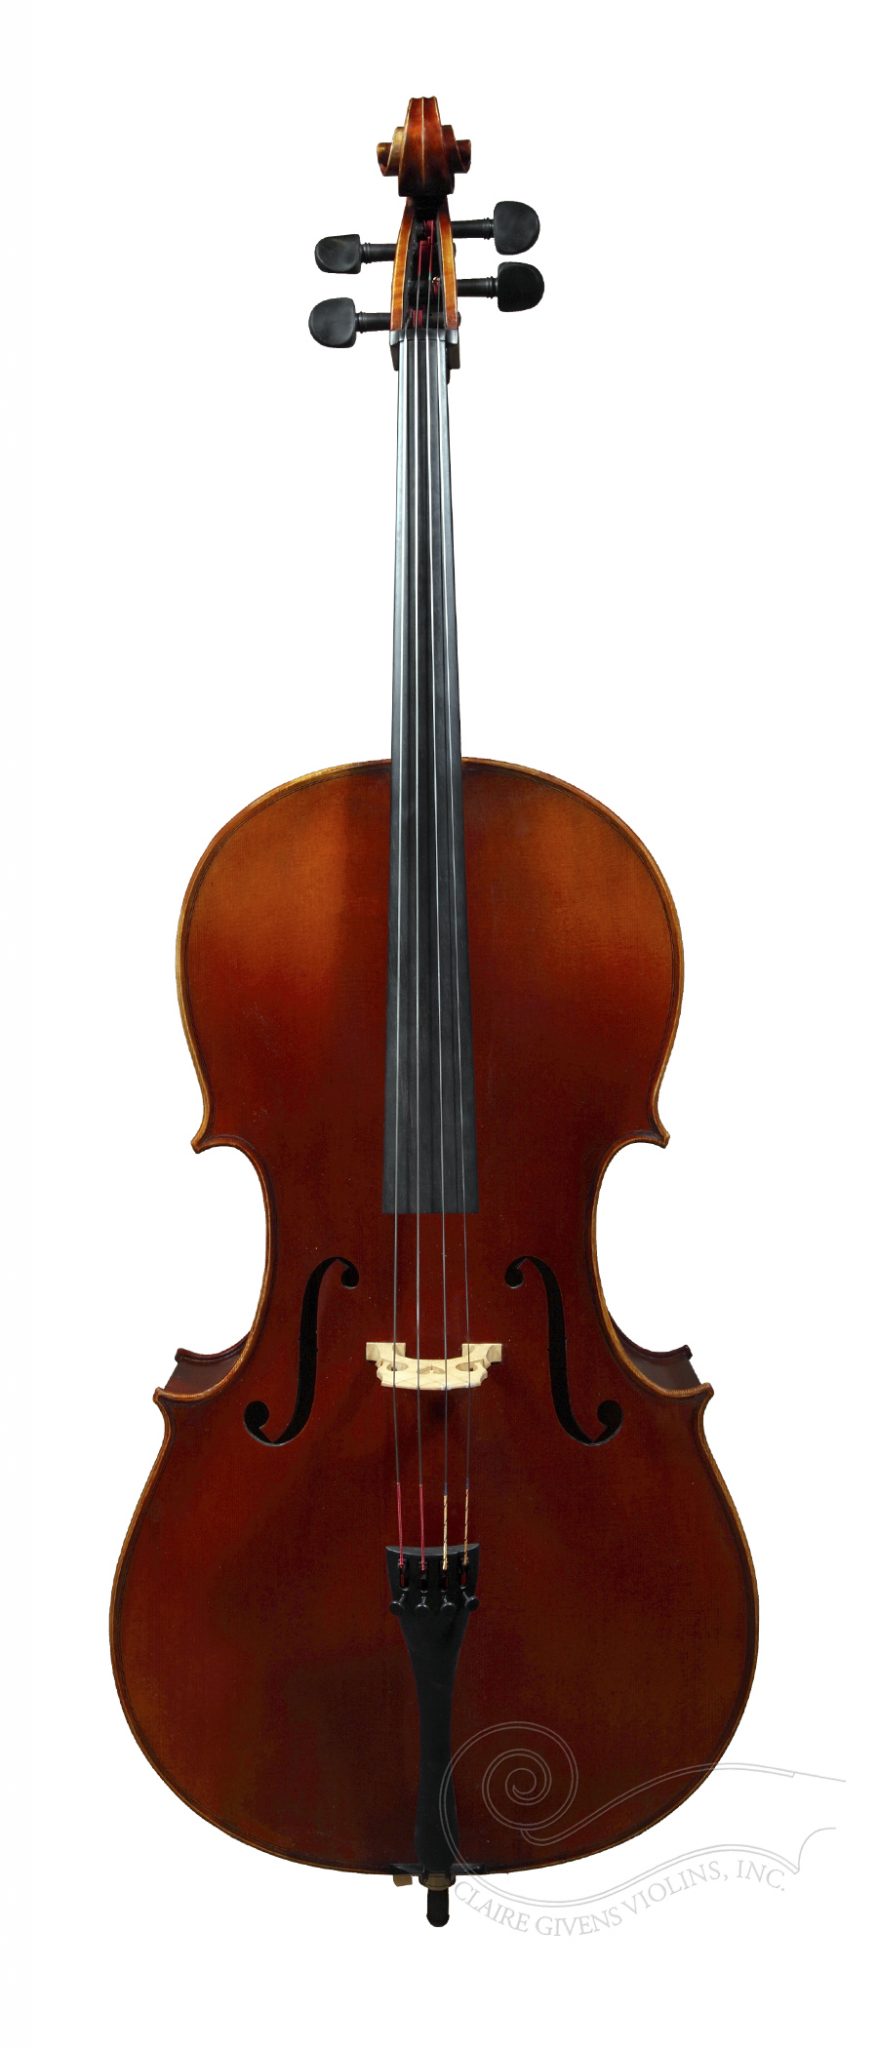 cl1384-front-claire-givens-violins-inc